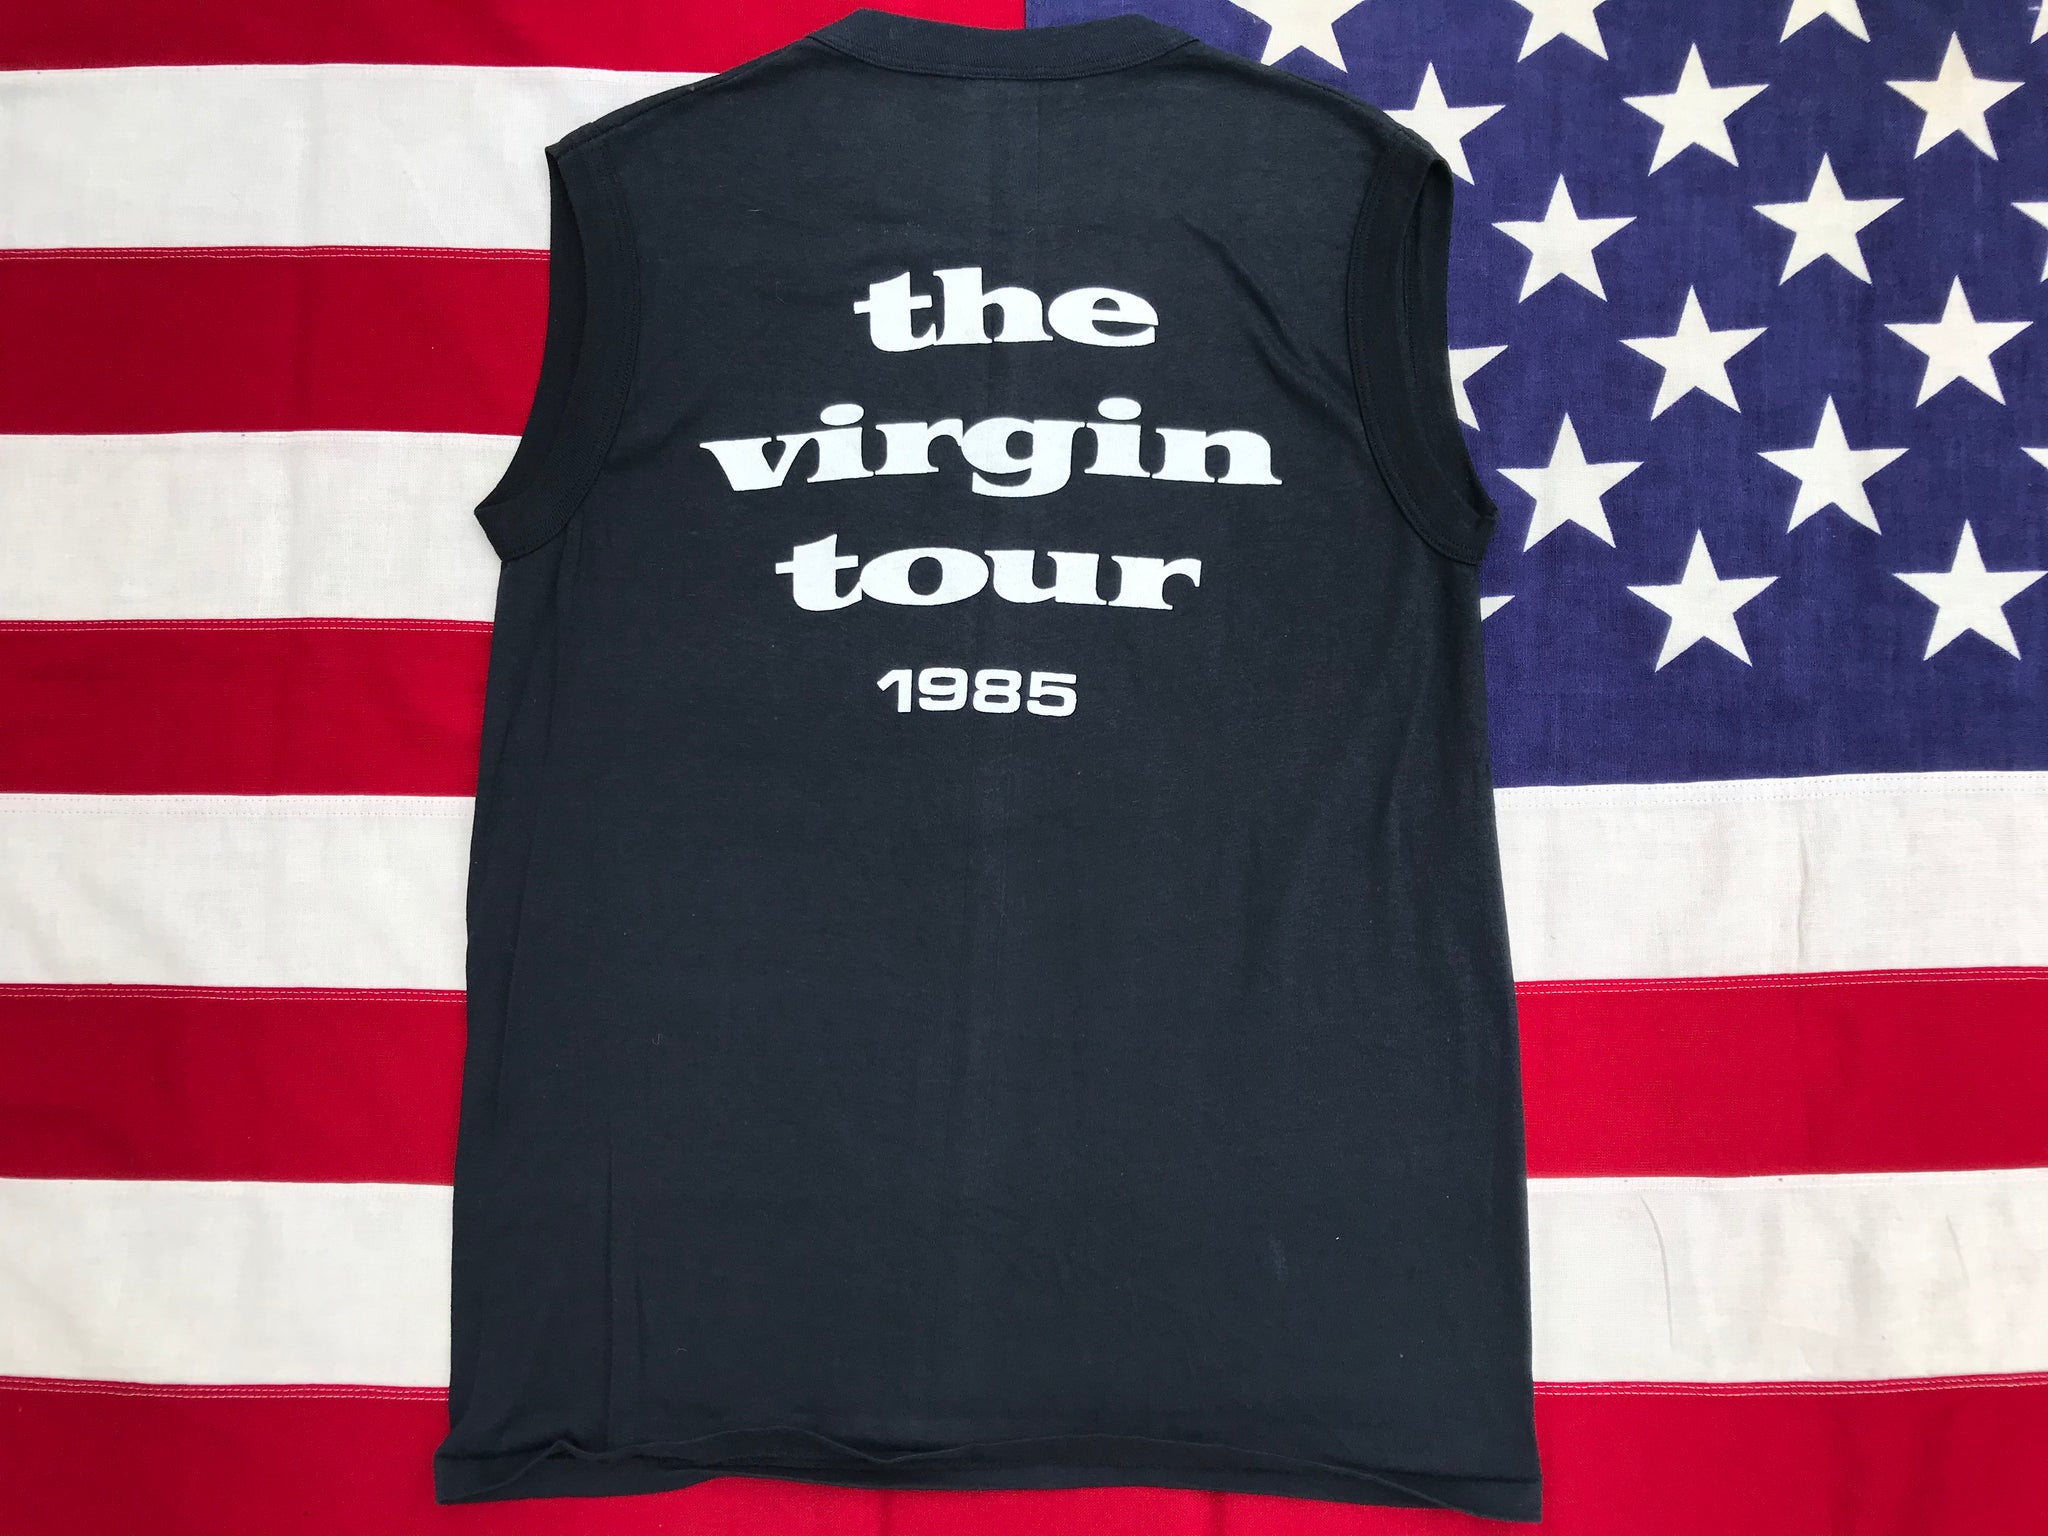 Madonna RARE “ The Virgin Tour 1985 “ Original Vintage Rock Sleeveless T-Shirt by Winterland Prod. San Francisco CA